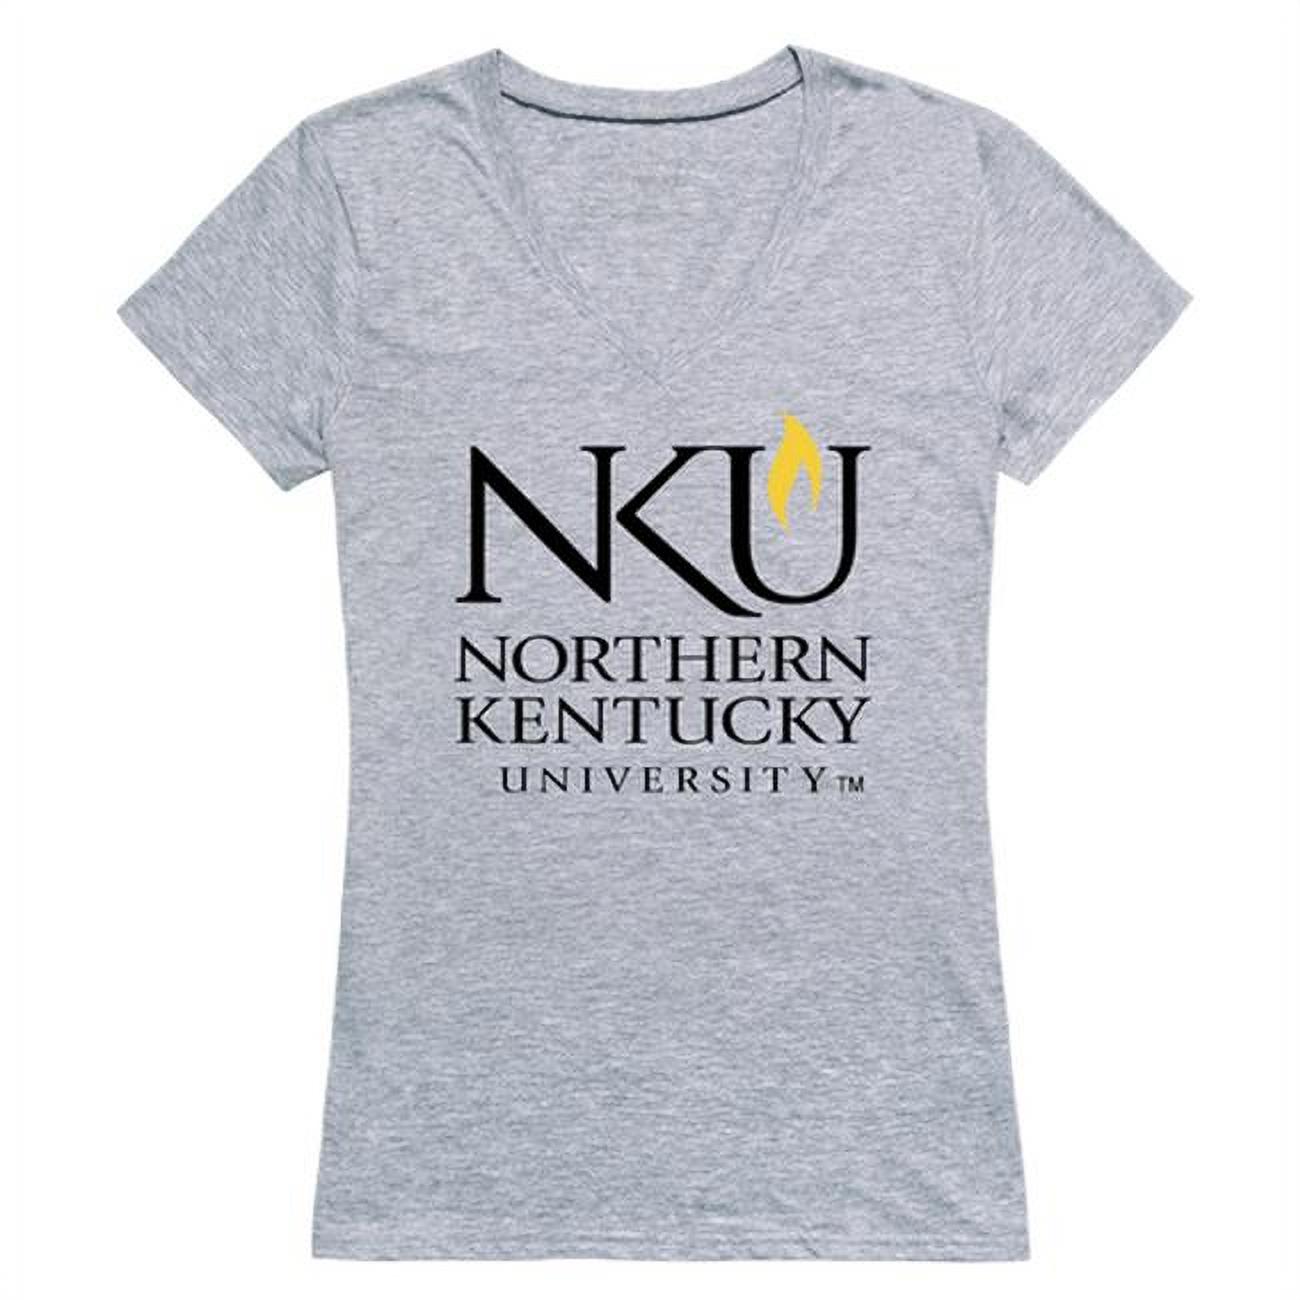 W Republic 520-356-H08-02 Northern Kentucky University Seal T-Shirt for Women, Heather Grey - Medium - image 1 of 1